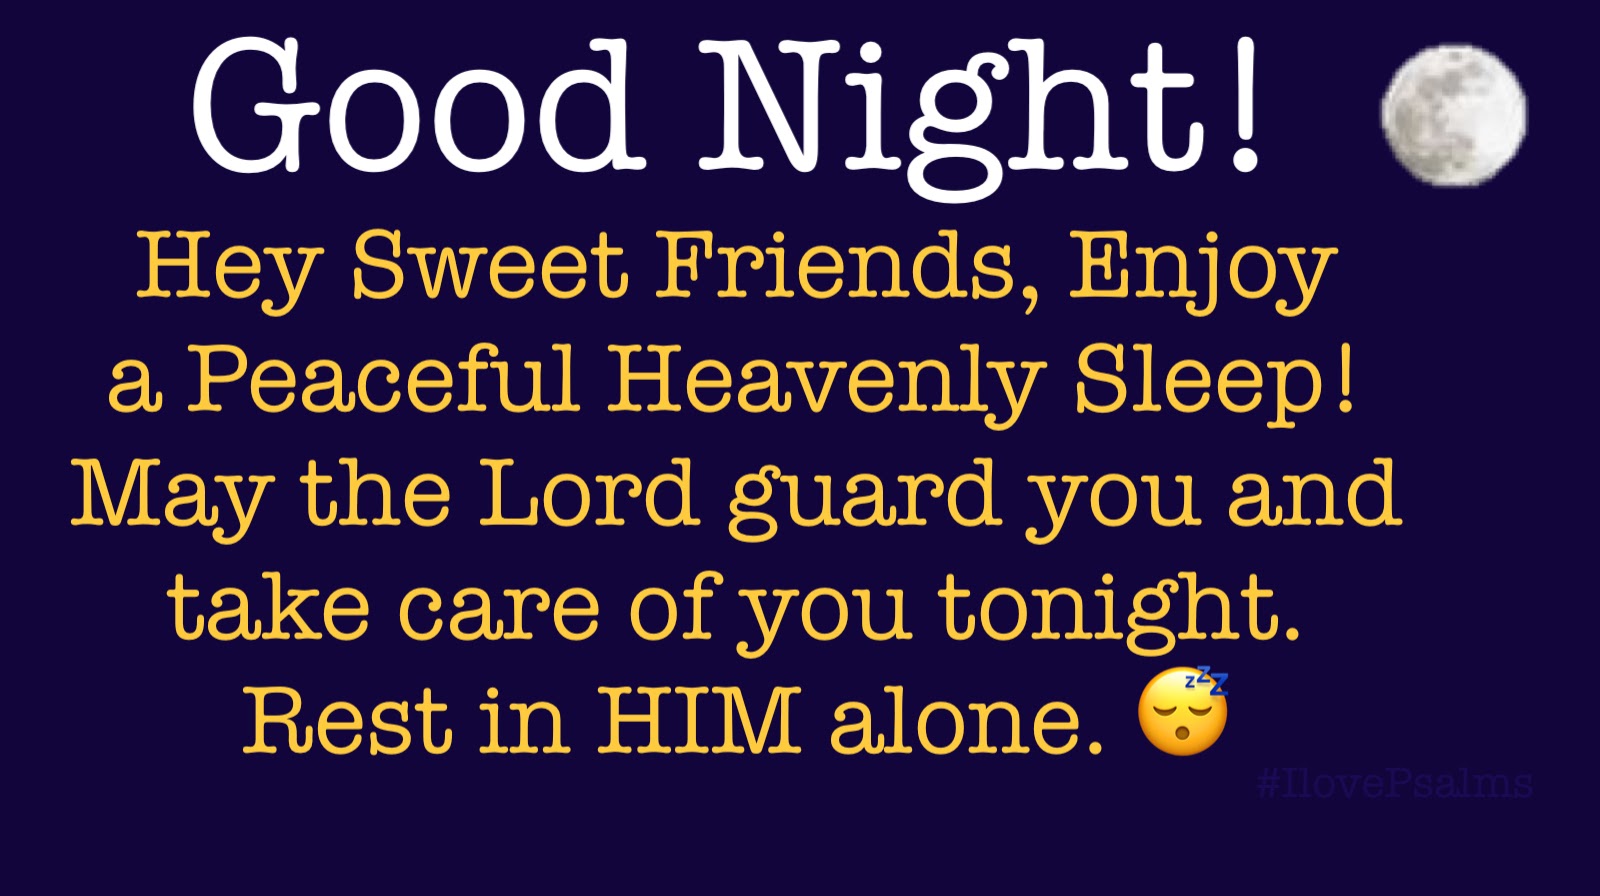 Hey Sweet Friends Enjoy a Peaceful Heavenly Sleep! Good Night!